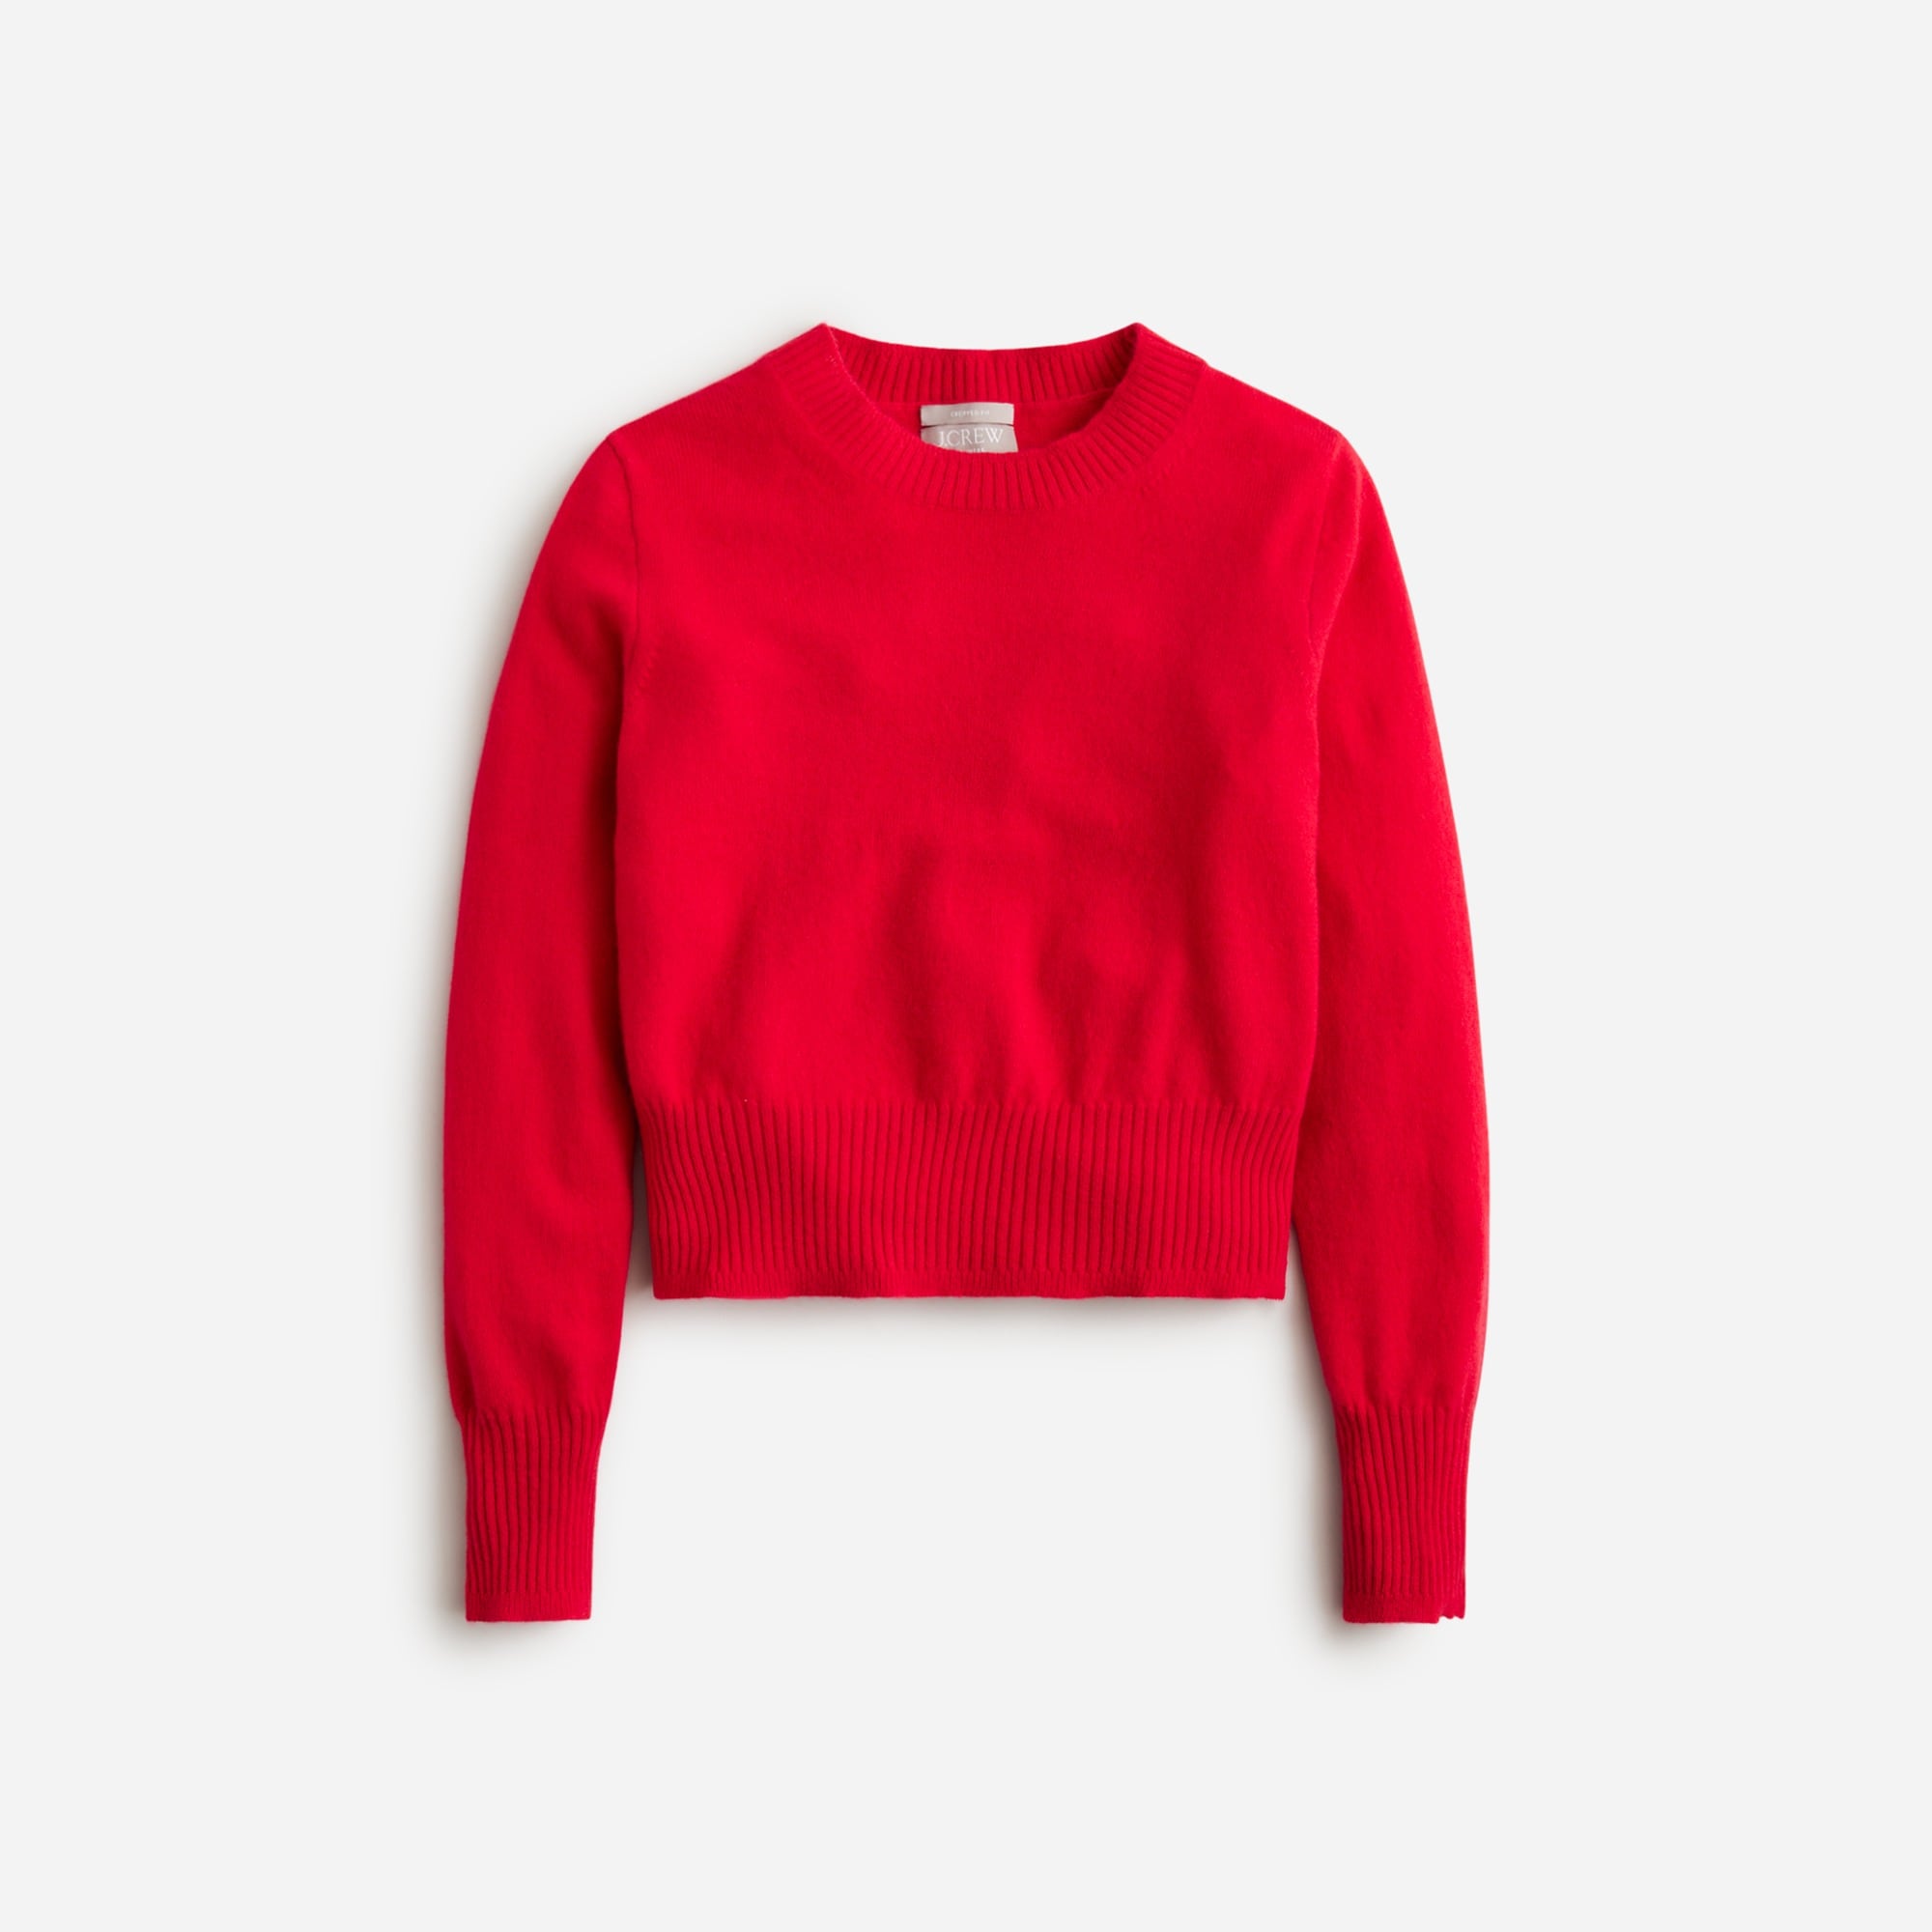  Cashmere shrunken crewneck sweater